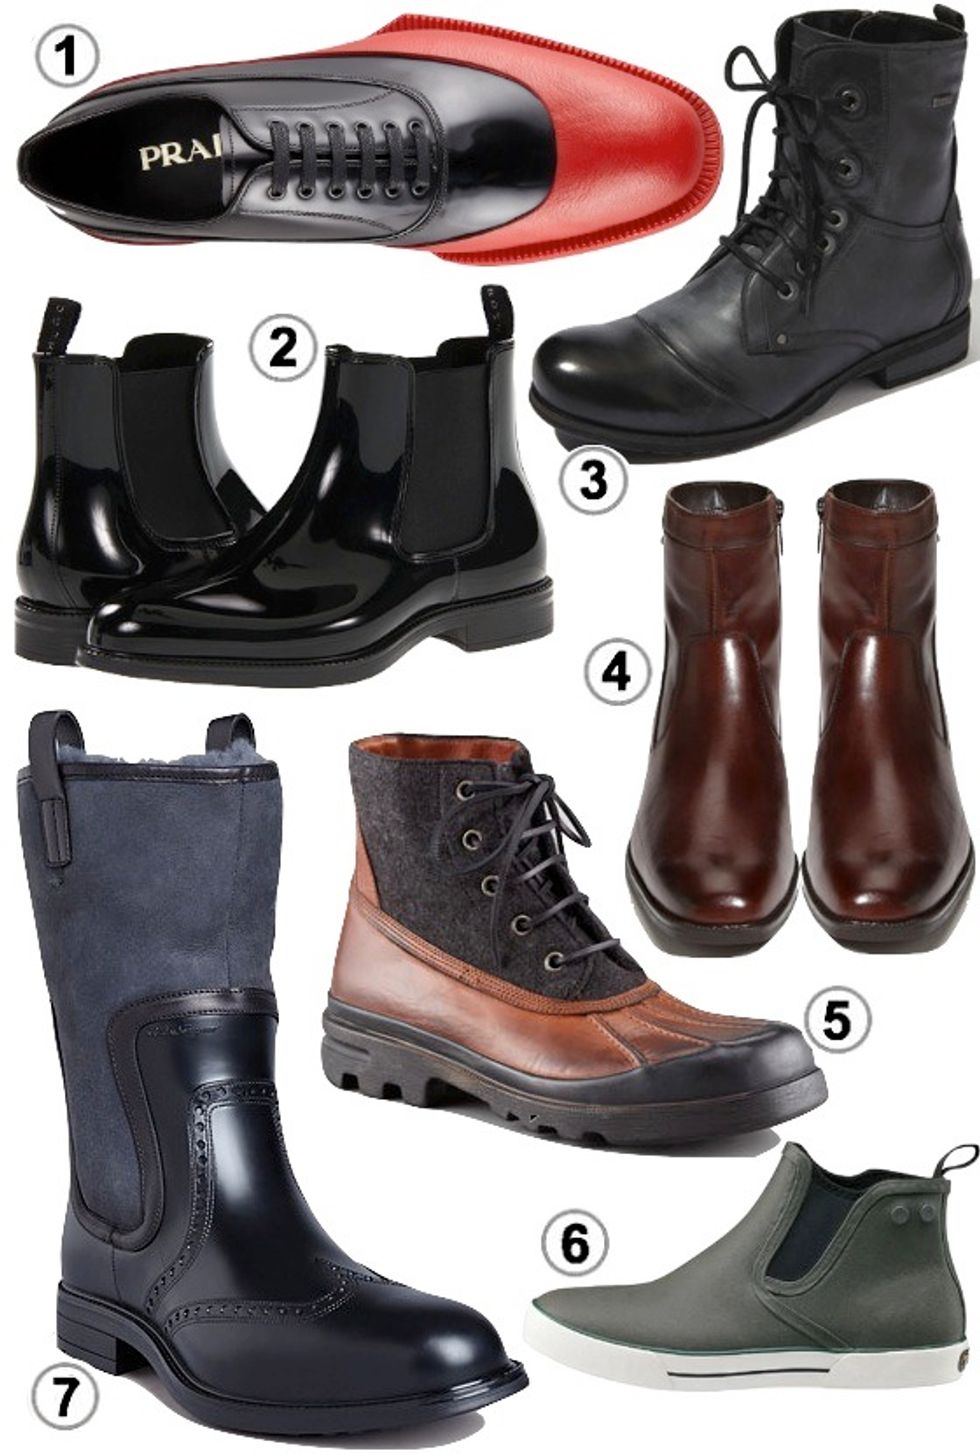 Look of the Week: Stylish Men's Rain Boots